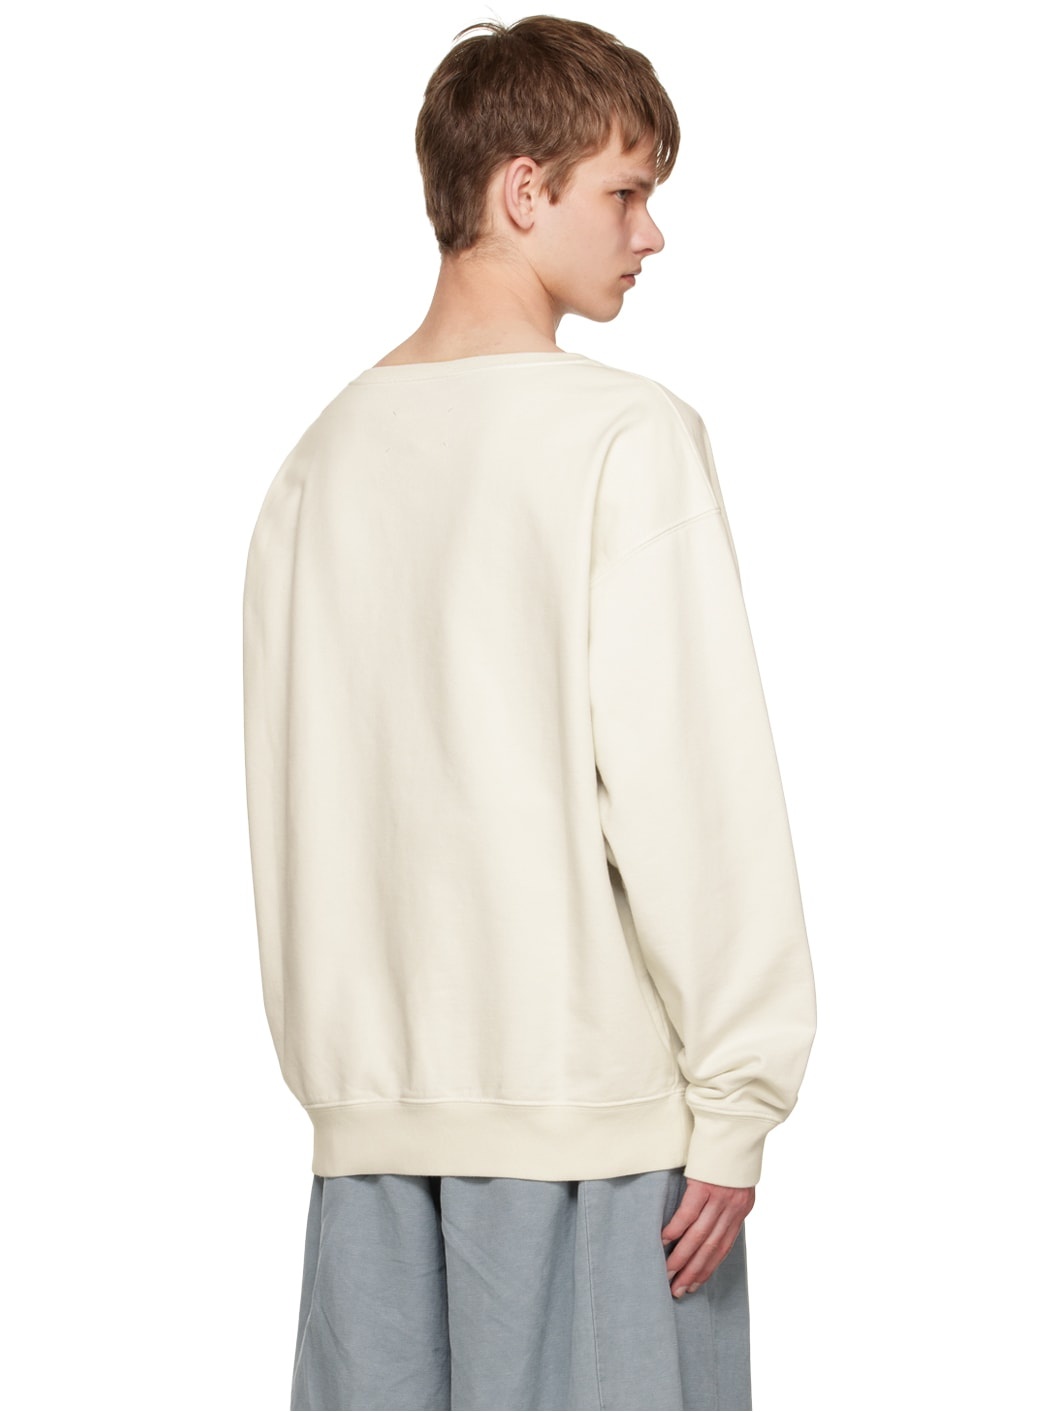 White Embroidered Sweatshirt - 3